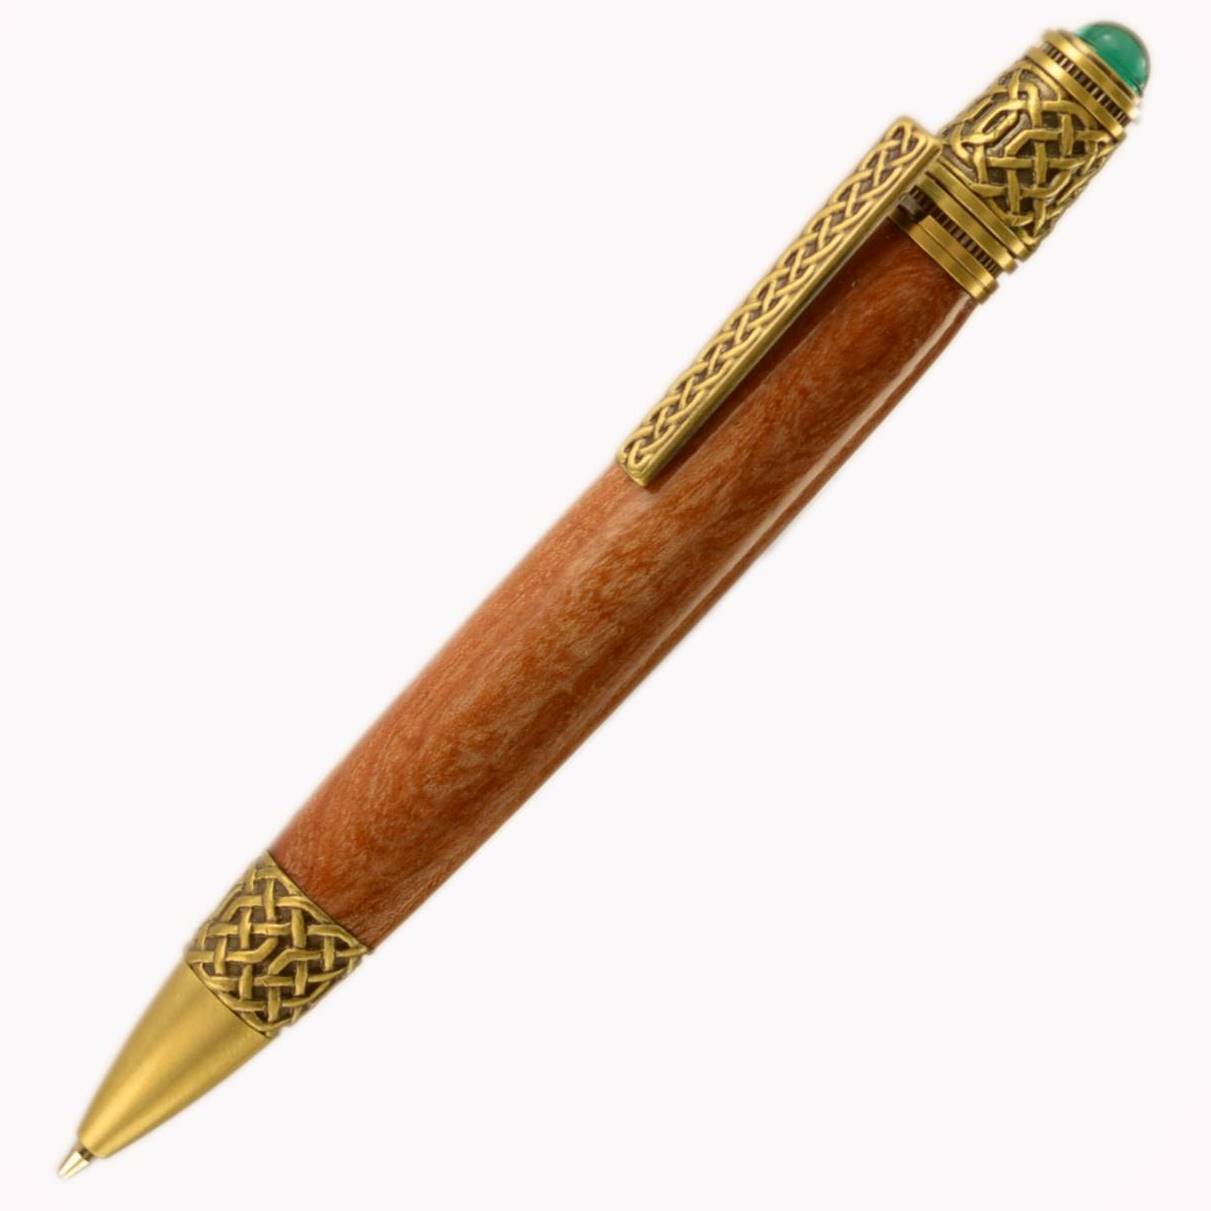 Celtic handmade writing pen from Ireland